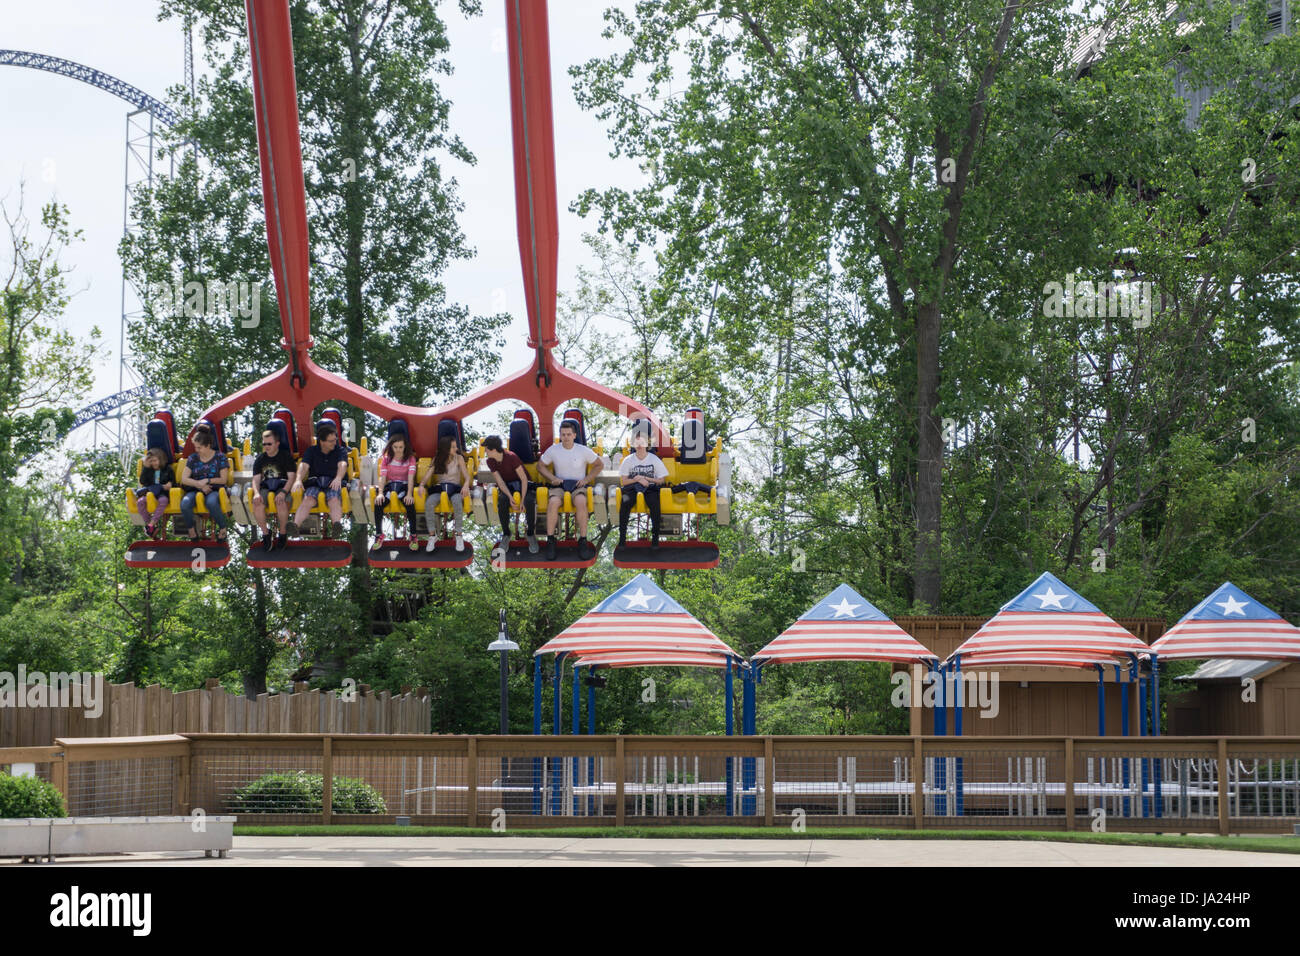 Large Swing at Amusement Park Stock Photo